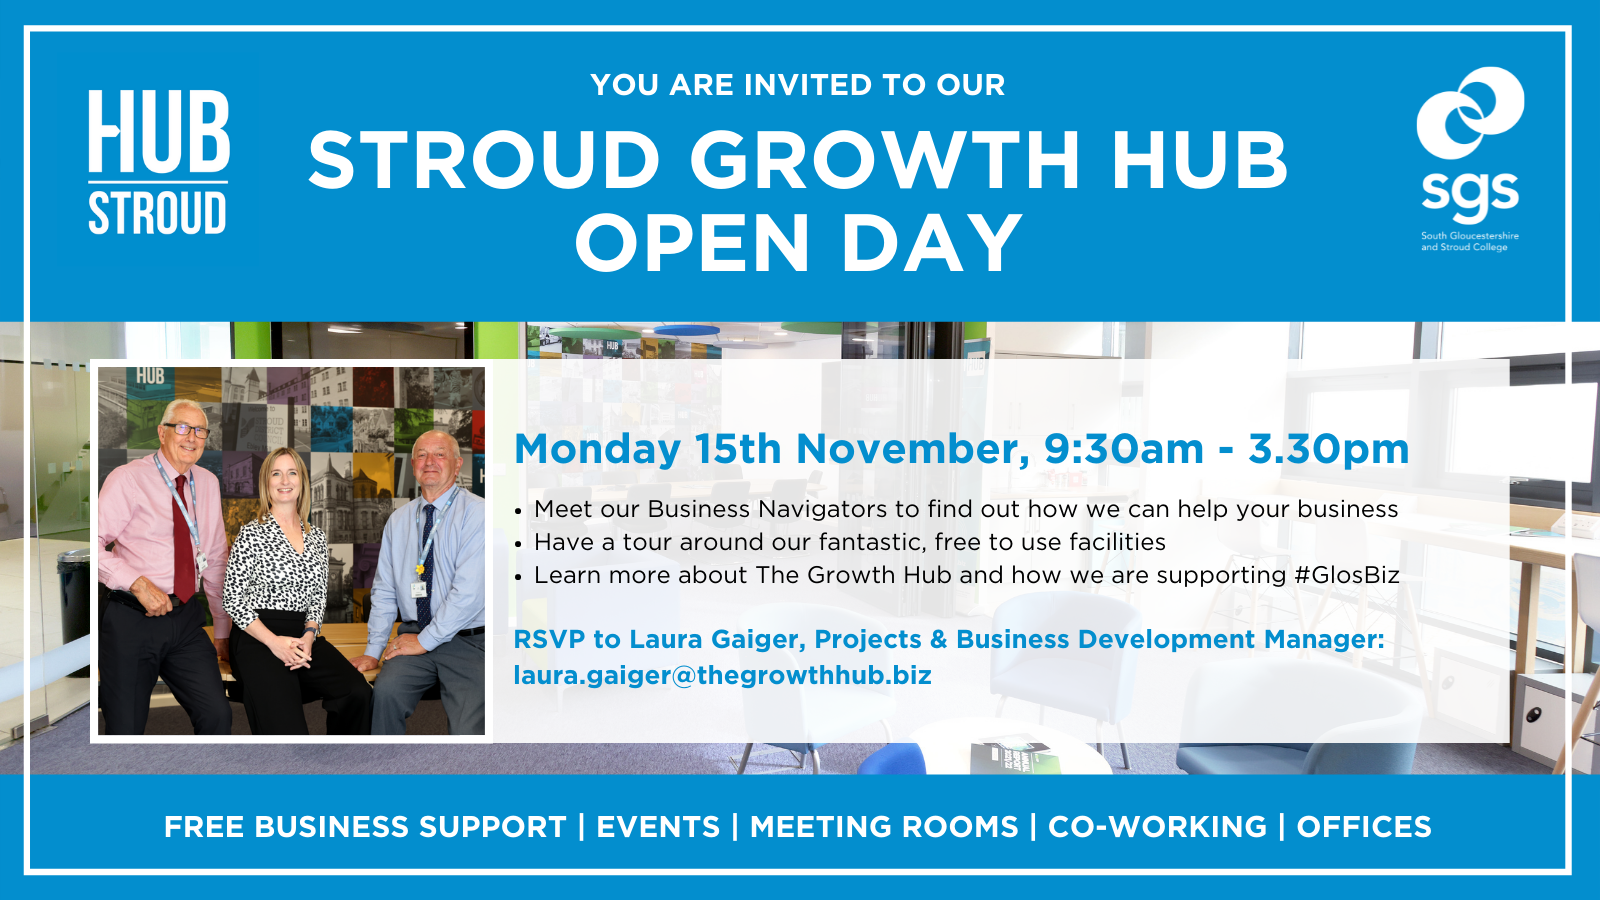 Stroud Growth Hub open day